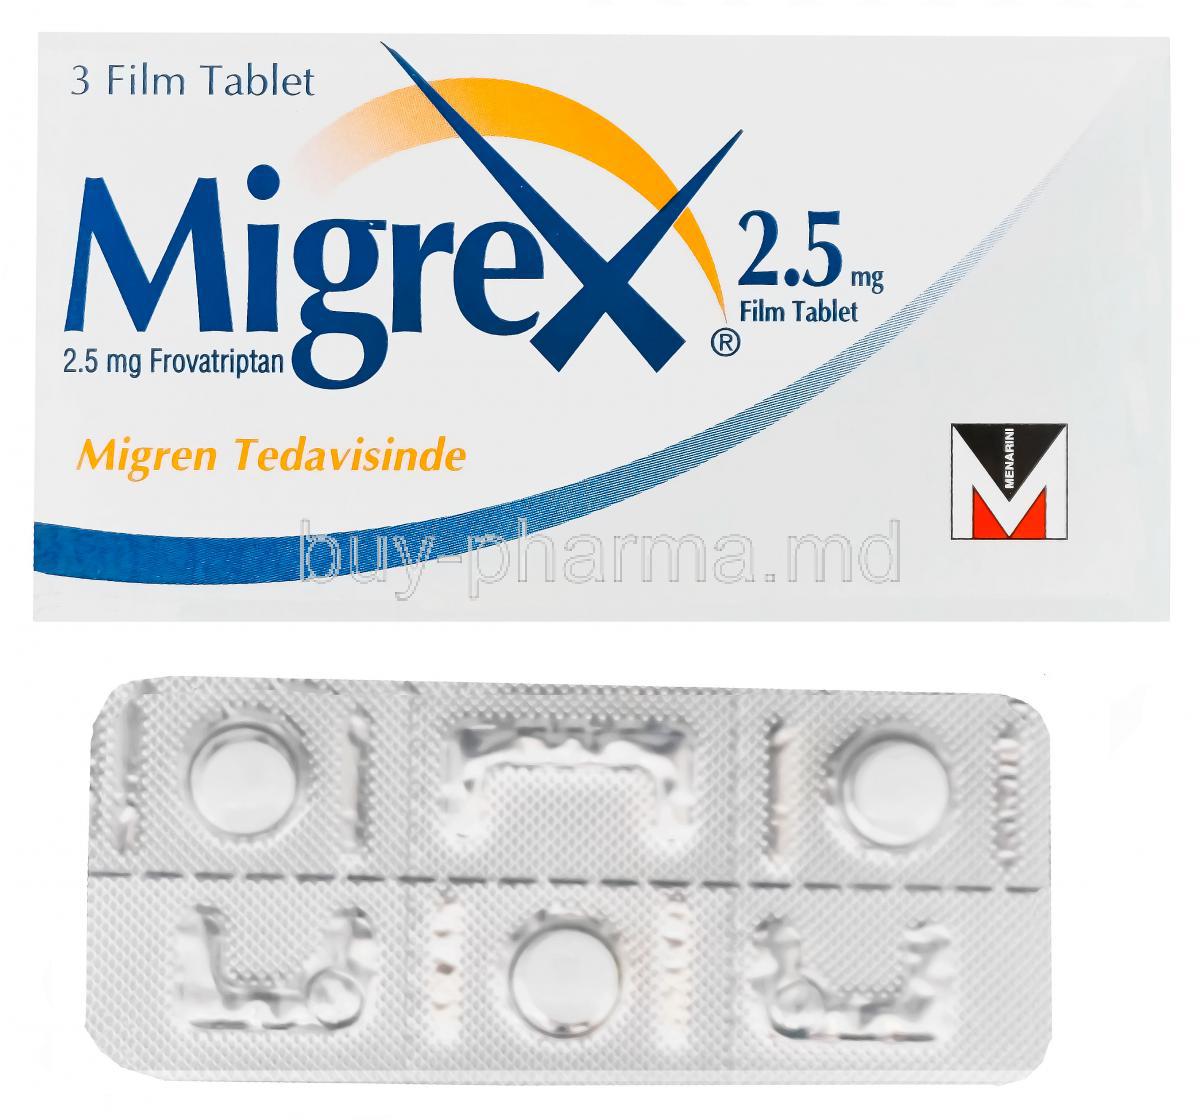 Migrex, Frovatriptan 2.5mg